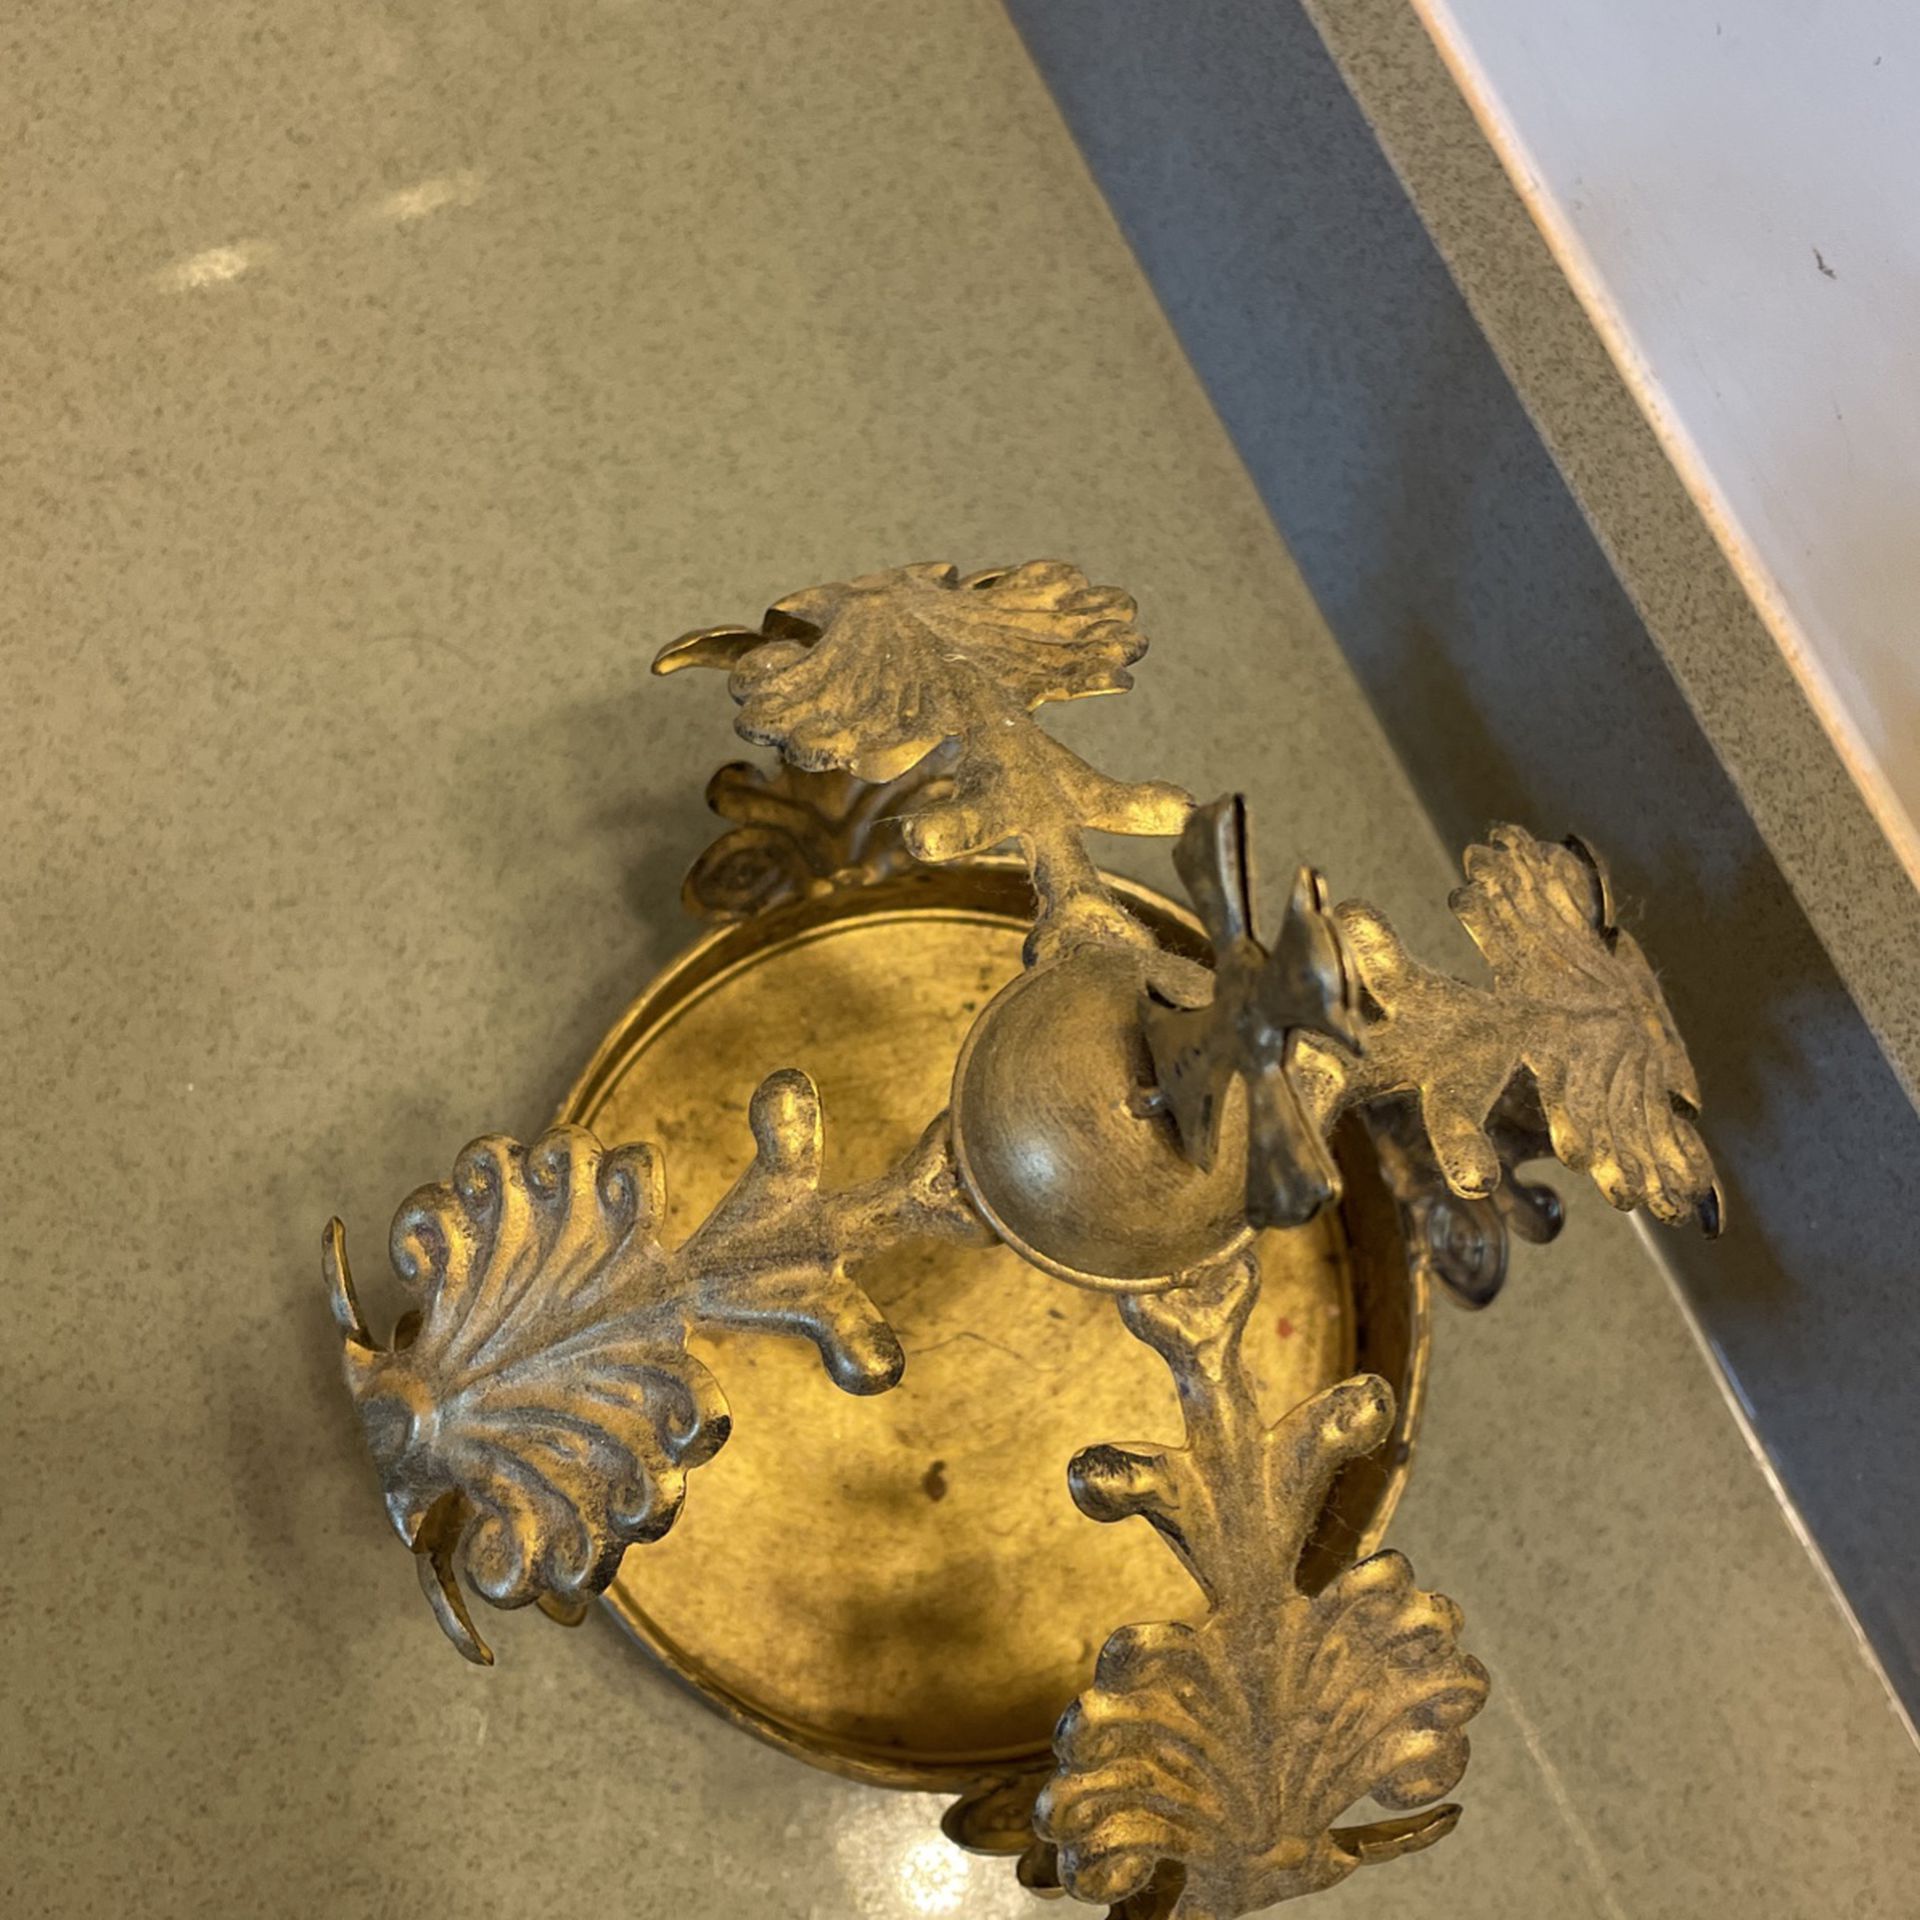 Decorative Gold Crown